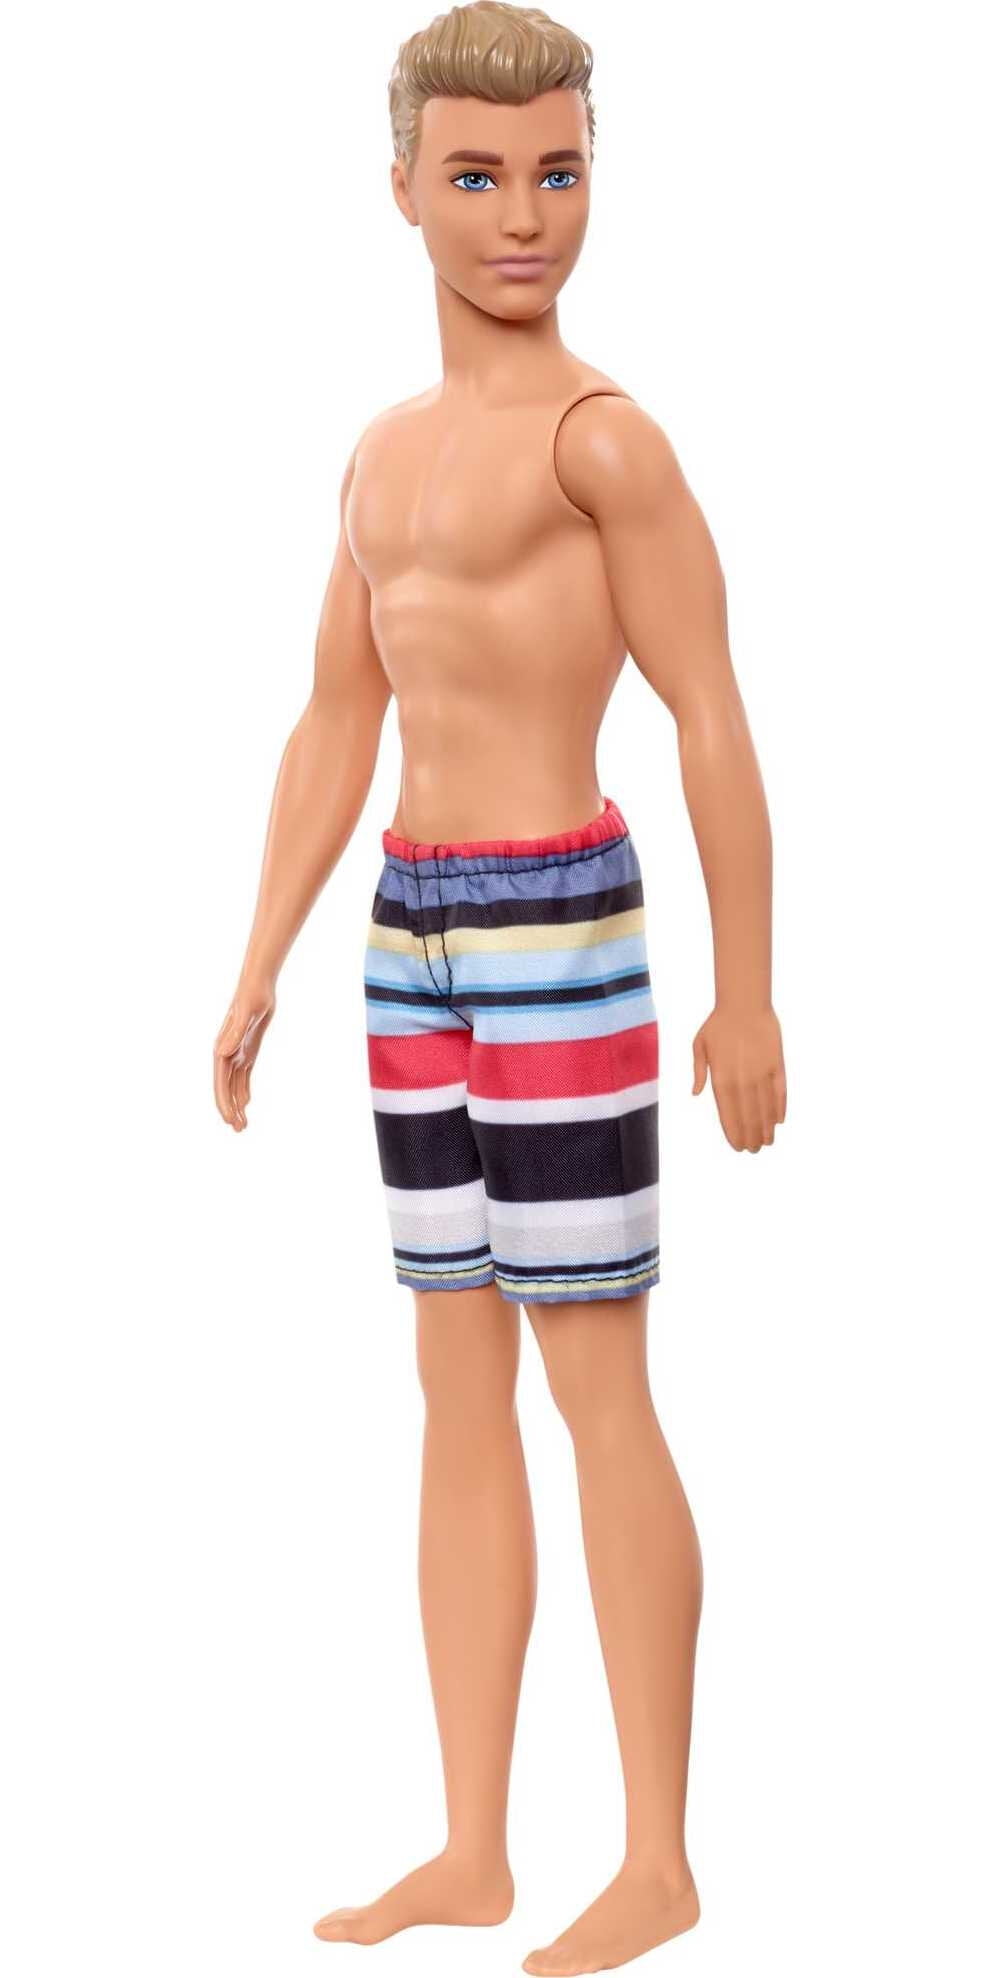 Barbie Ken Beach Doll with Blonde Hair & Striped Swimsuit - Walmart.com